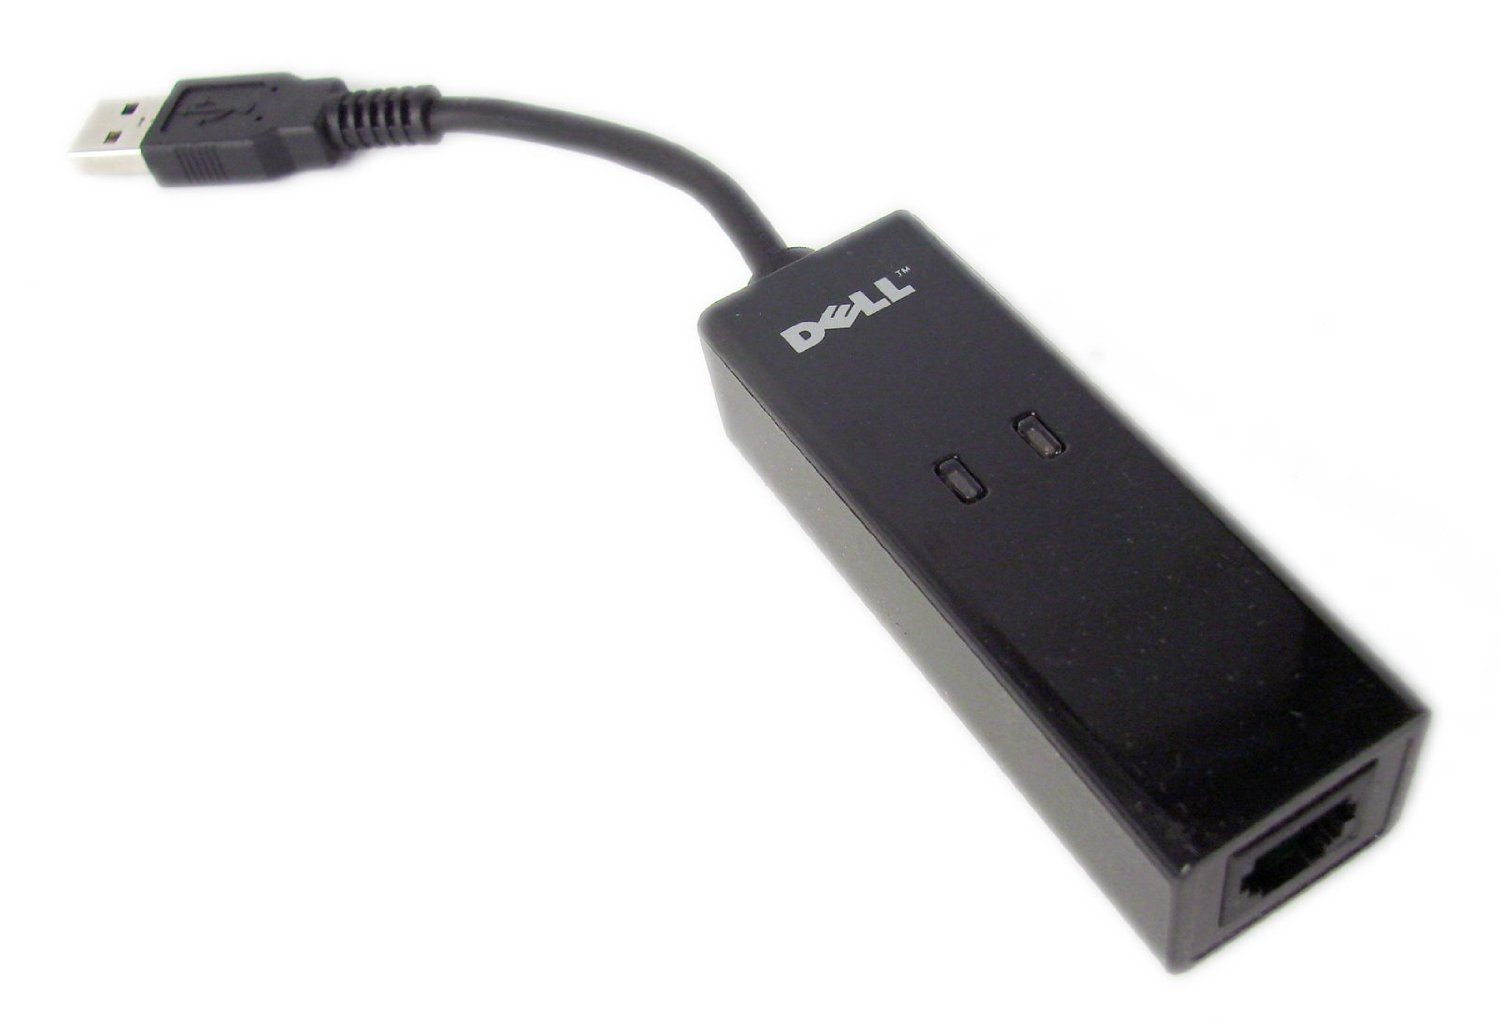 Dell NW147 56K External USB Modem, Compatible Model Number: RD02-D400